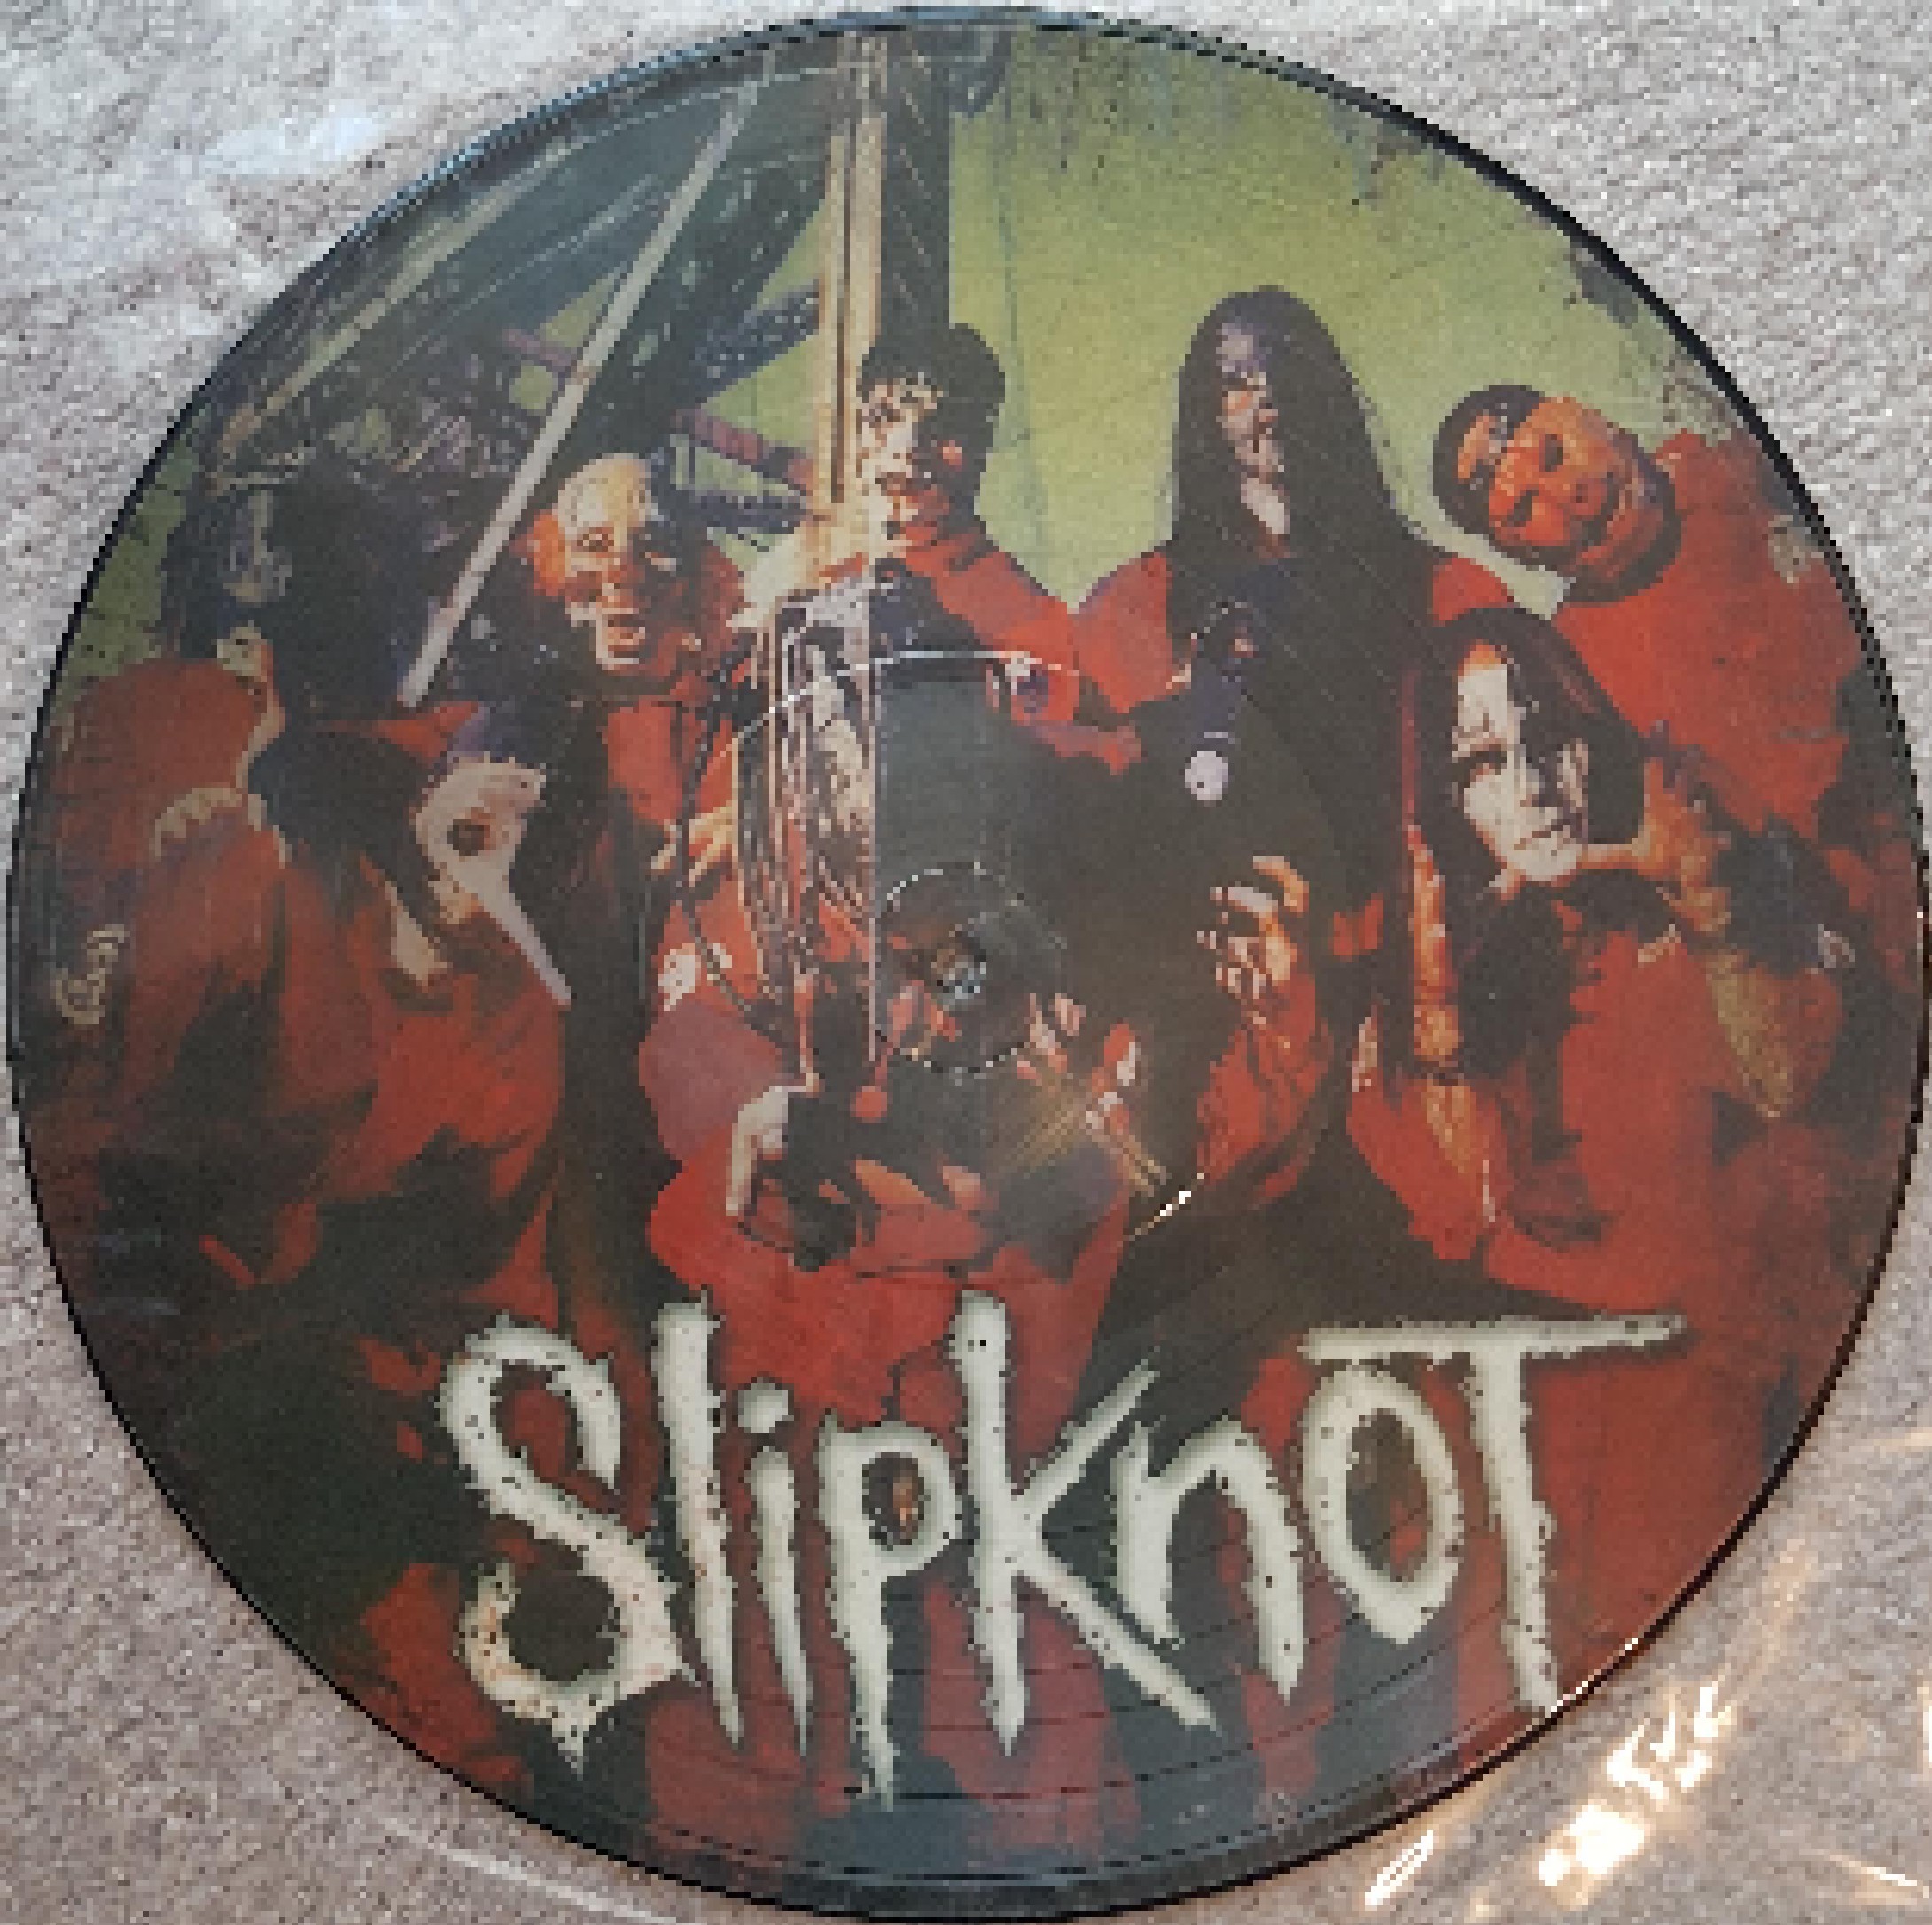 Slipknot PIC LP 1999 Limited Edition Nummeriert Von Slipknot